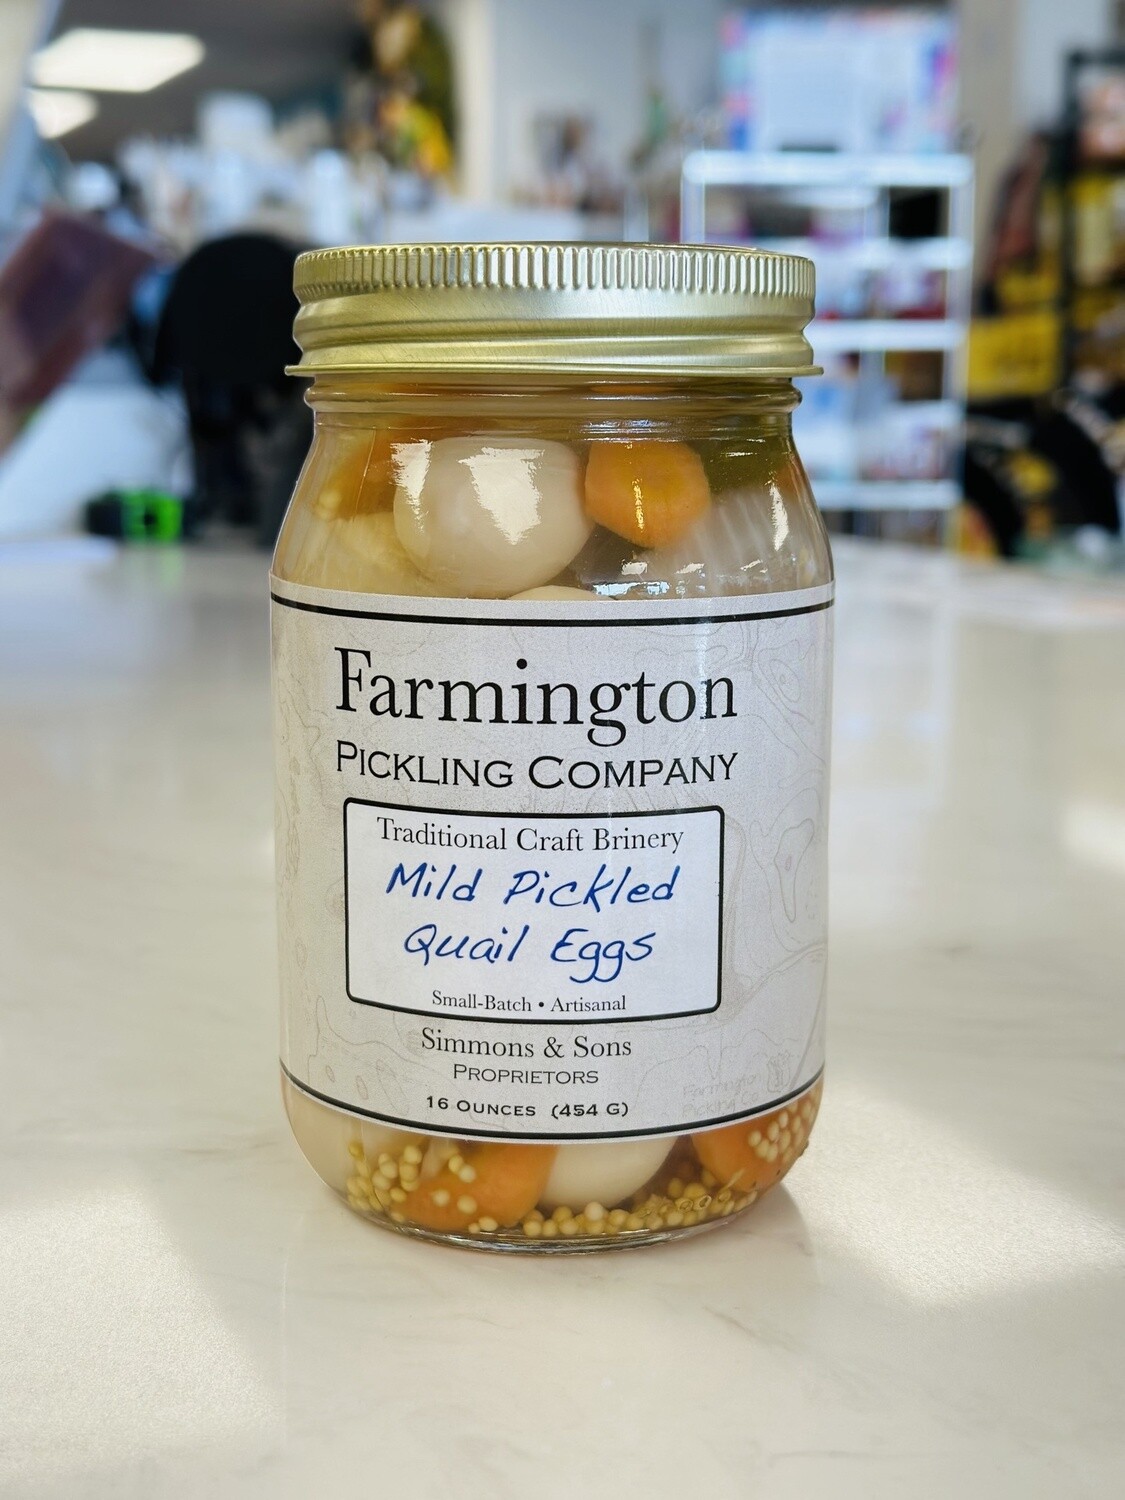 Farmington Pickling Company Mild Pickled Quail Eggs